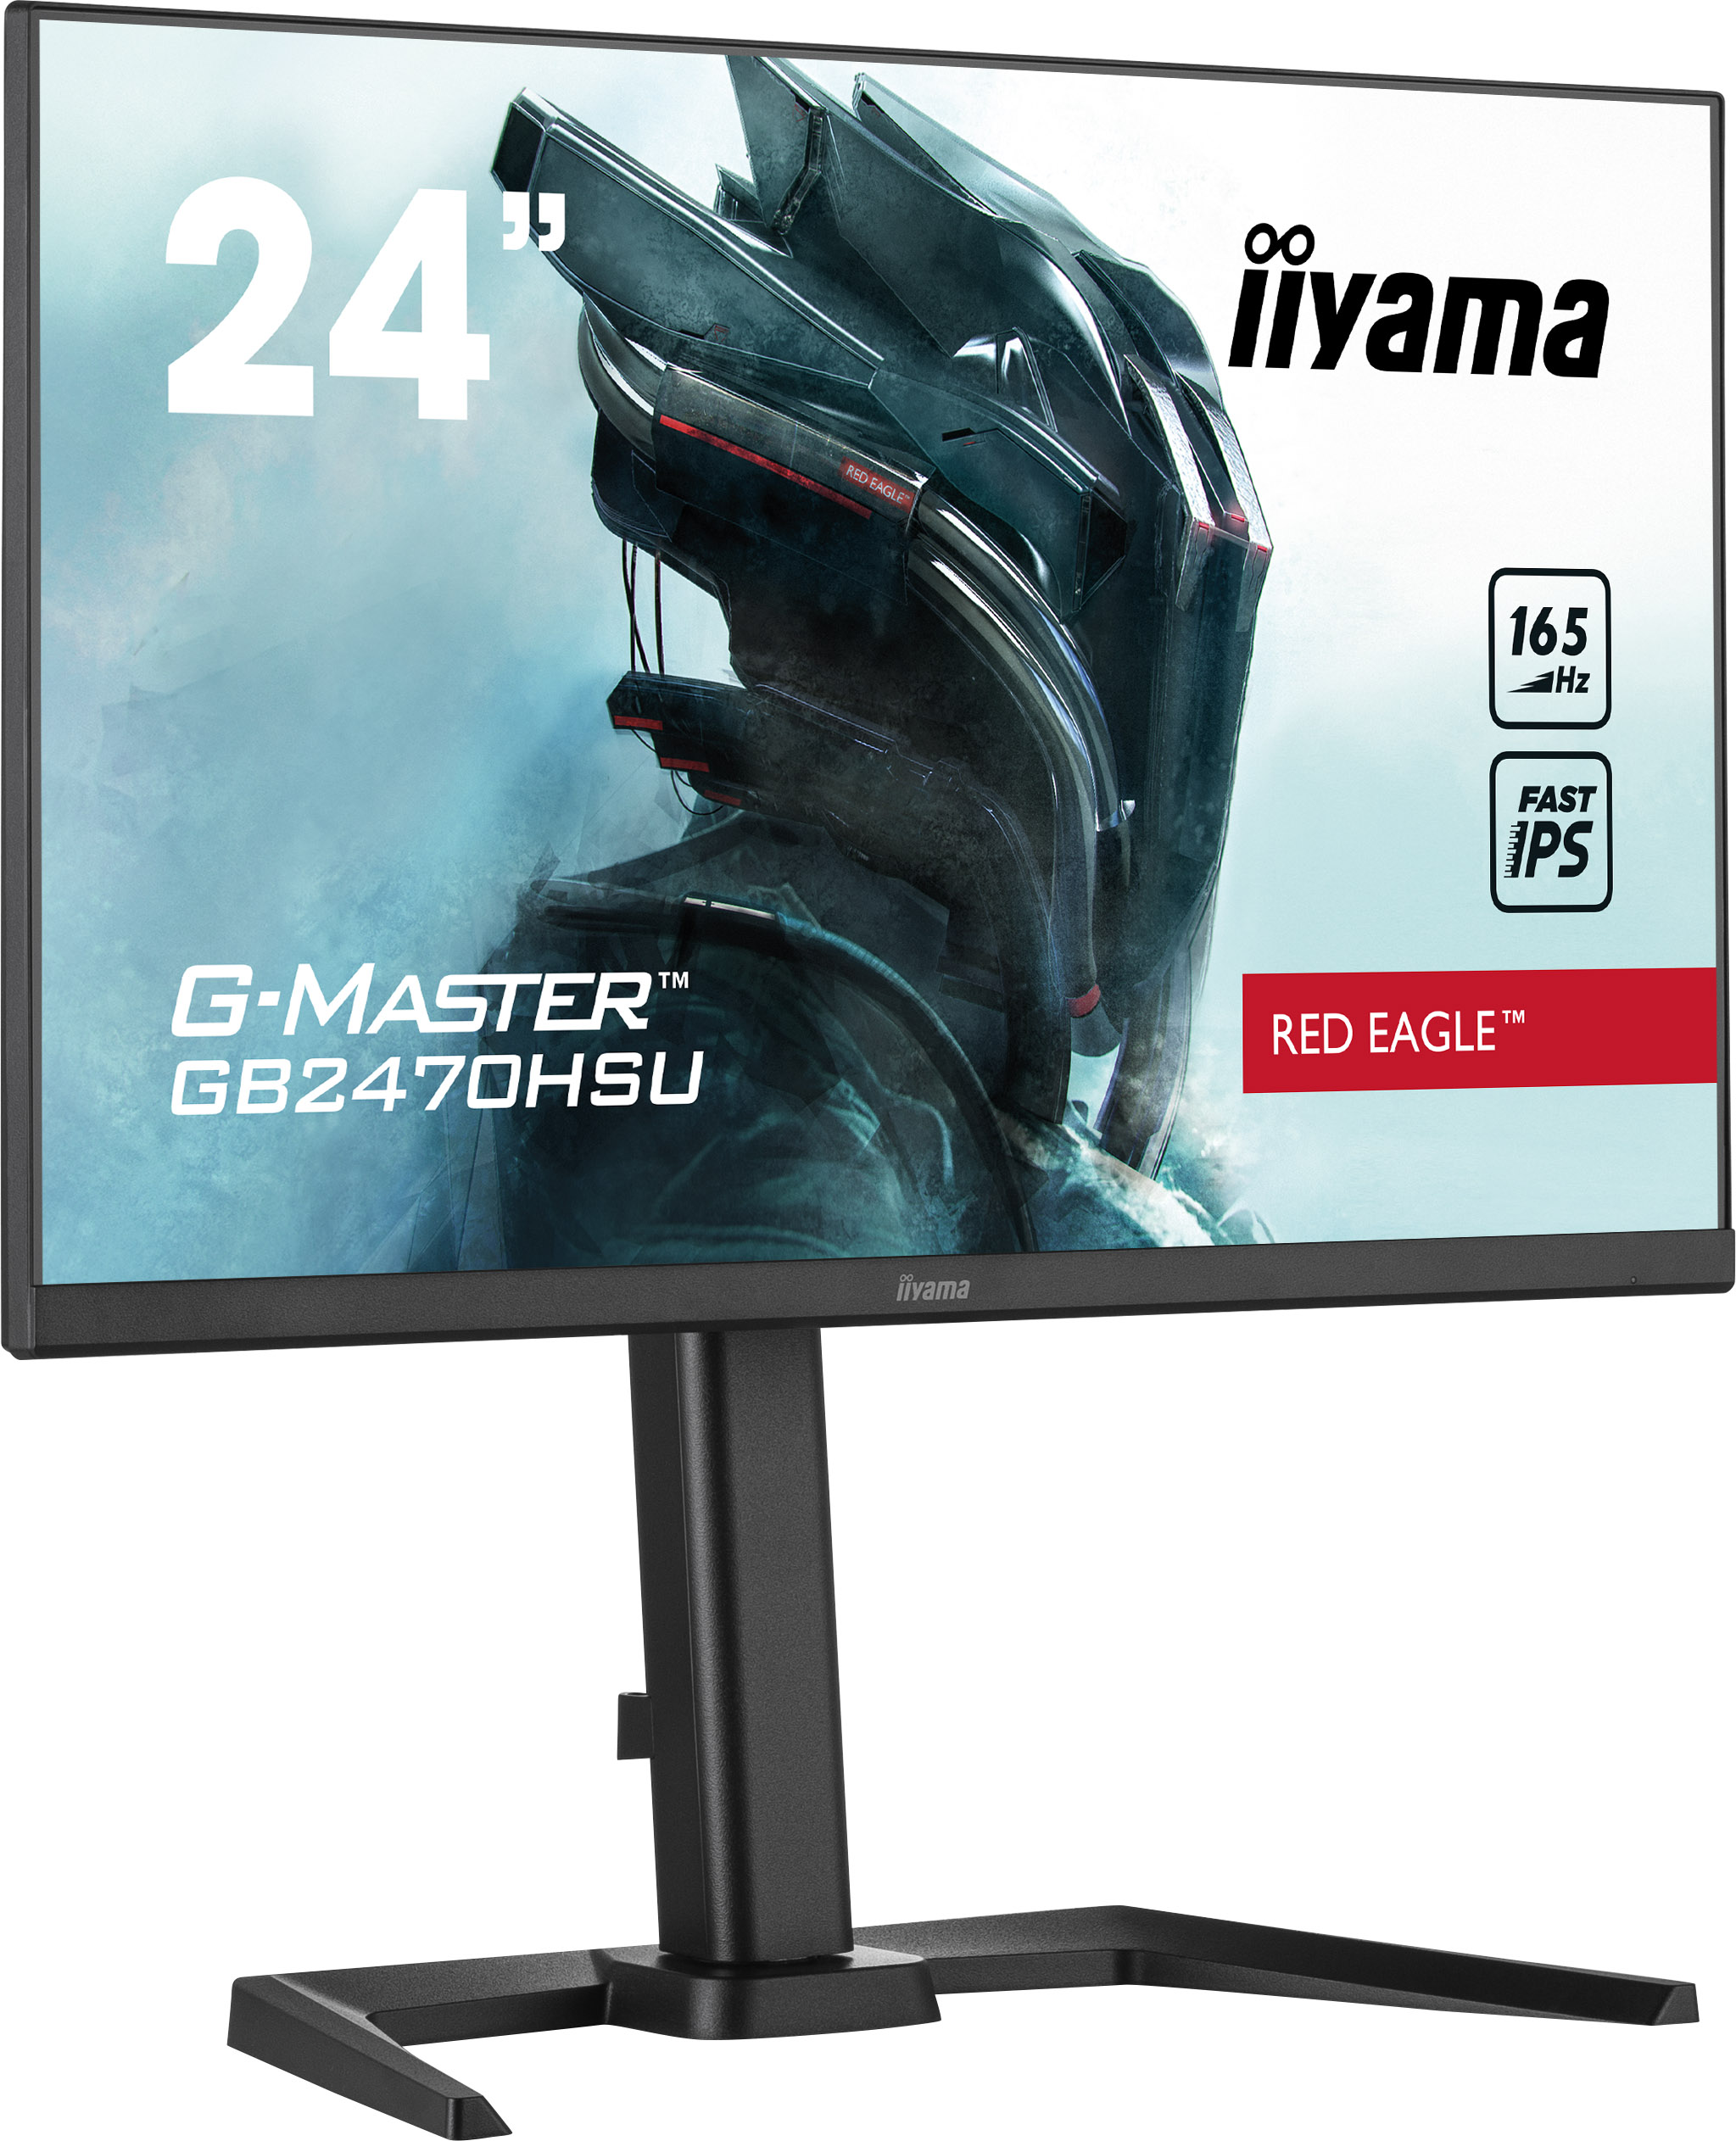 iiyama - G-Master GB2470HSU-B5 Unleash your full gaming potential with the  Fast IPS GB2470HSU Red Eagle